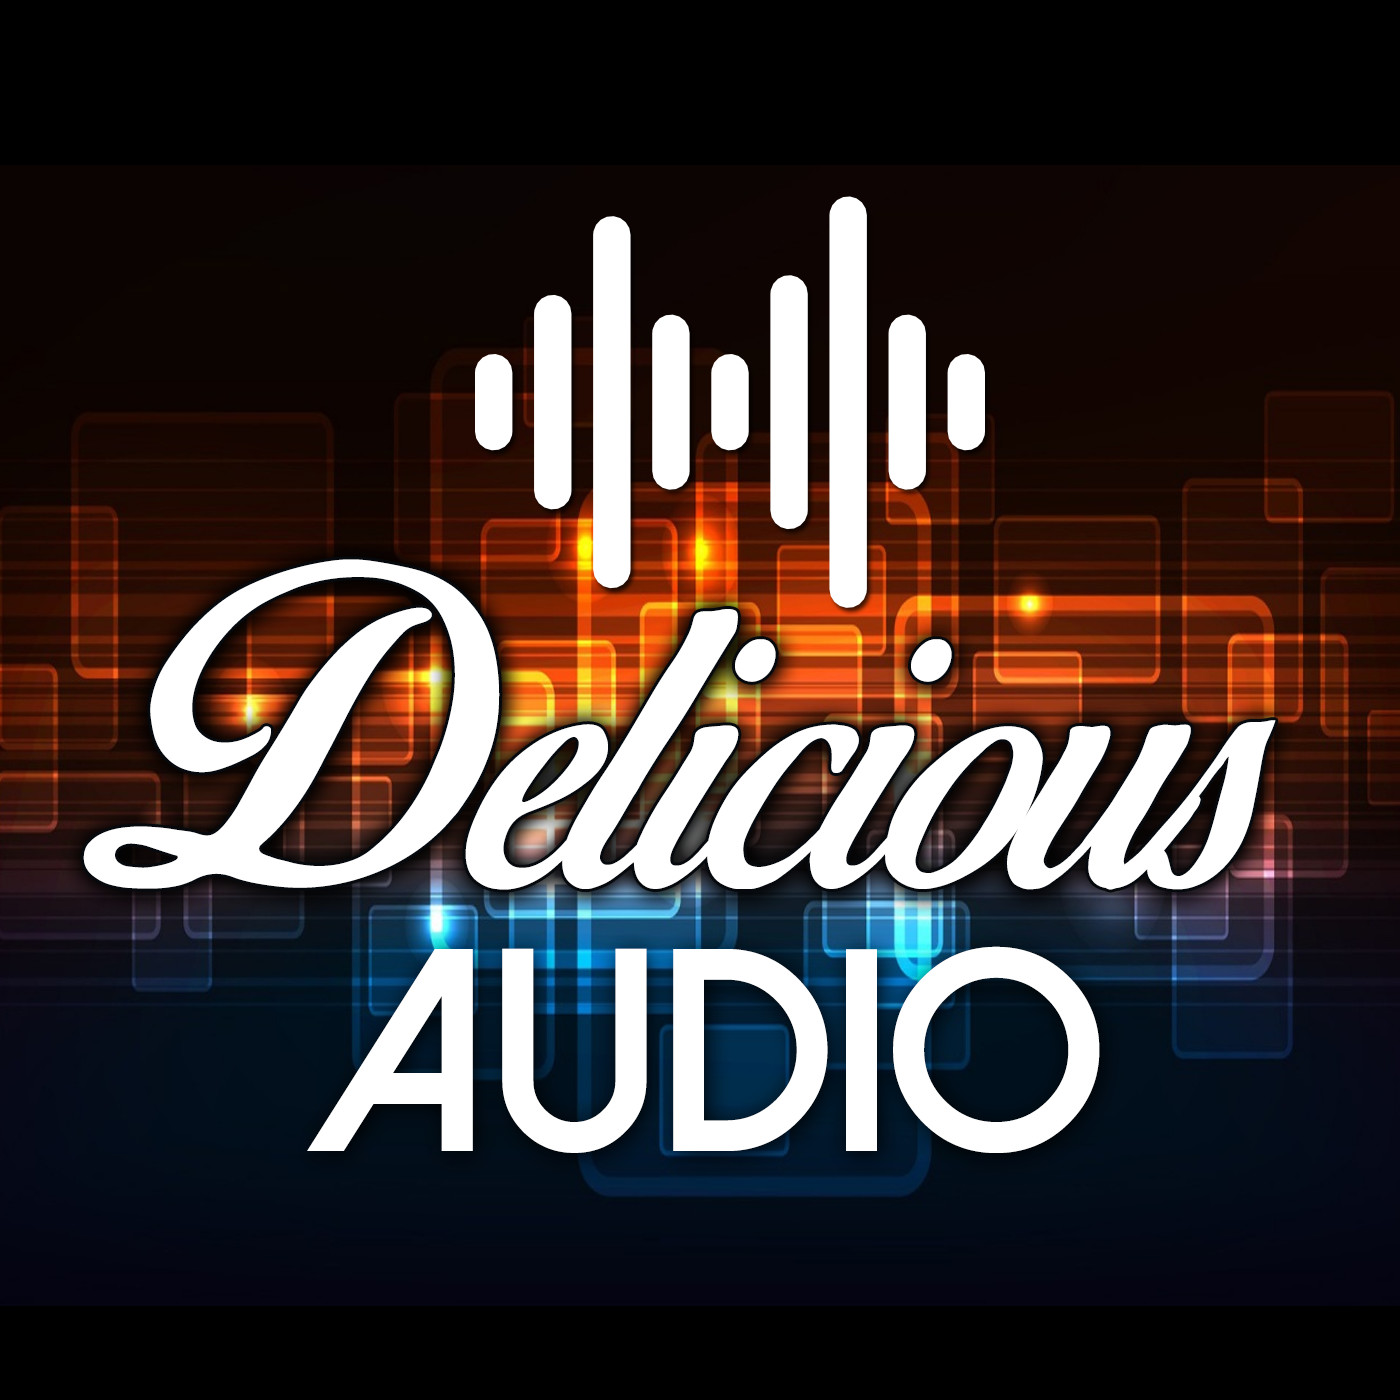 072618 Delicious Audio